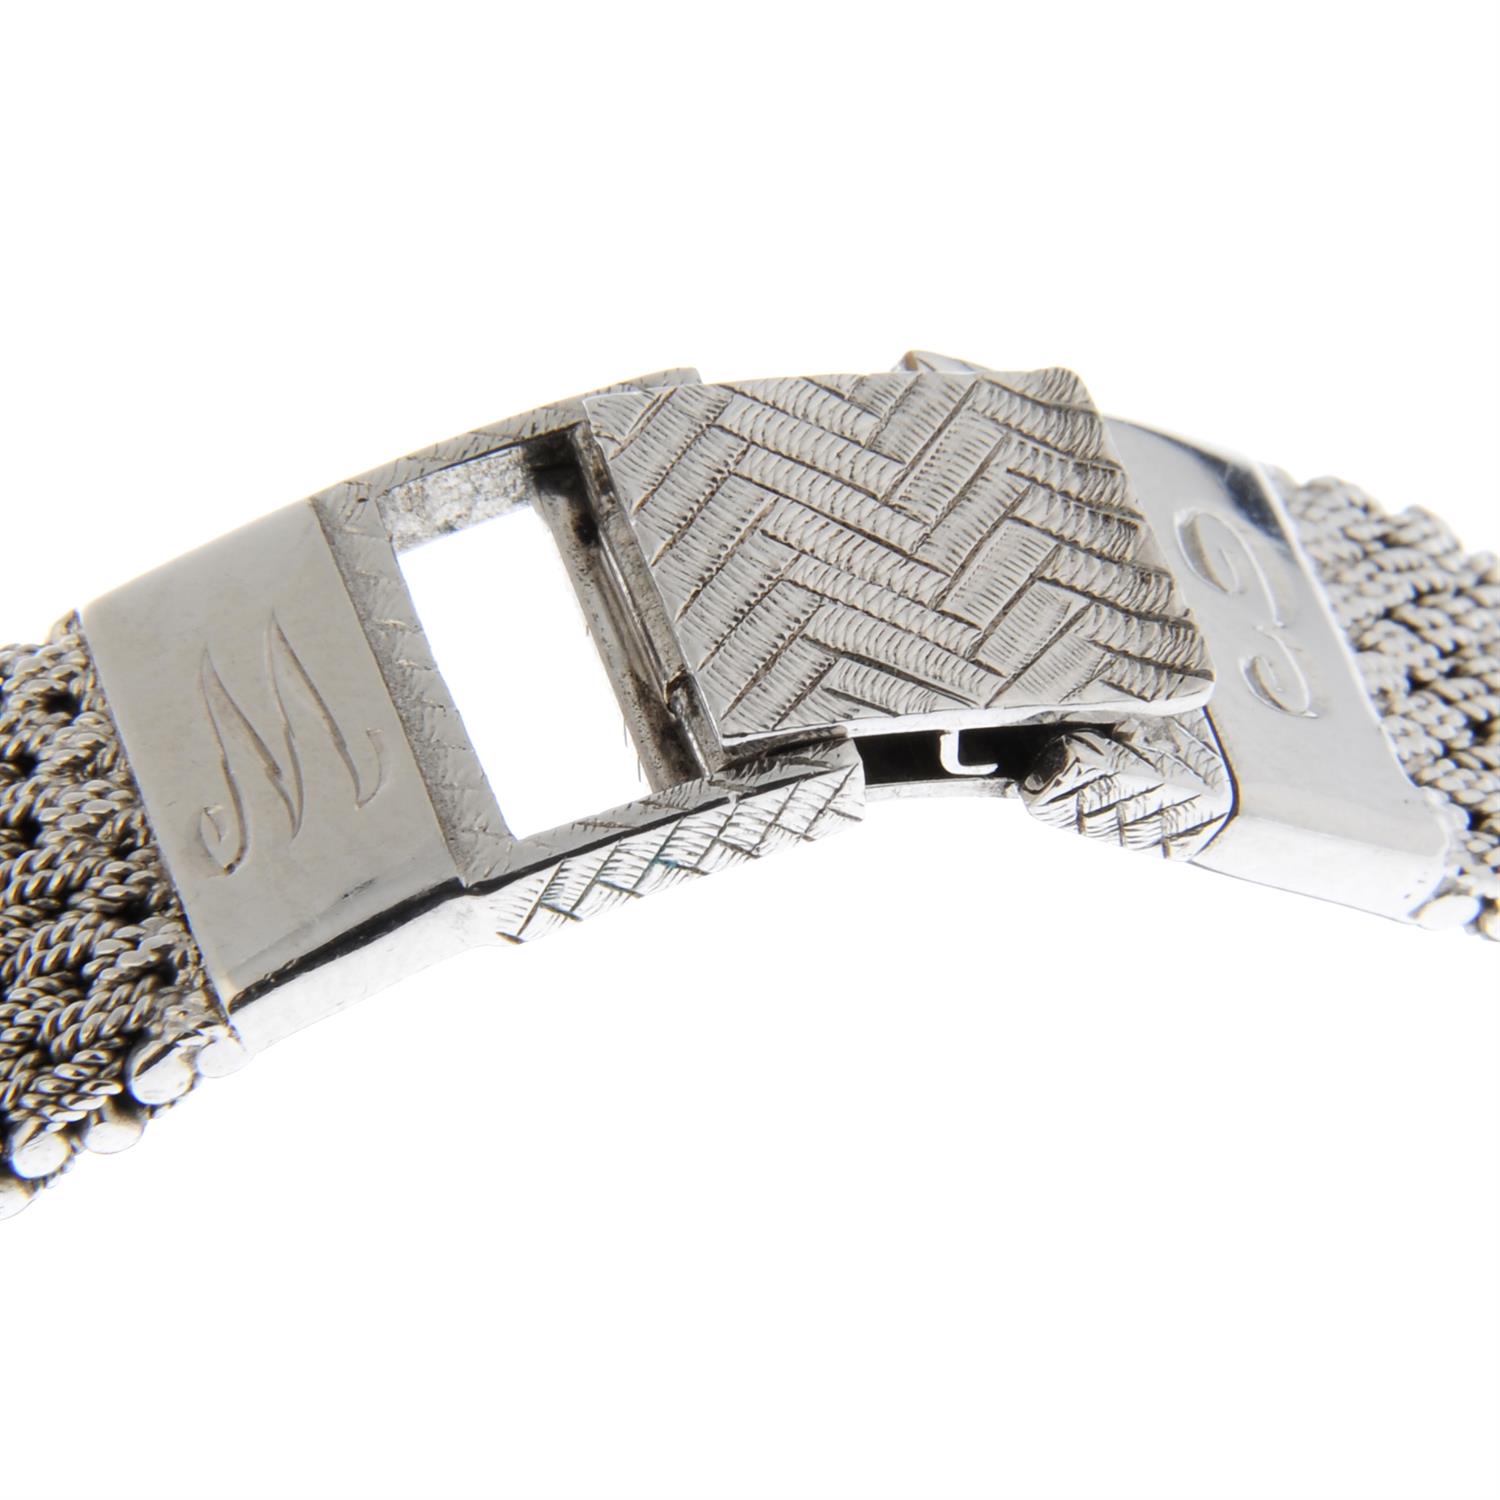 BUECHE GIROD - a 9ct white gold diamond set bracelet watch, 24mm. - Image 3 of 5